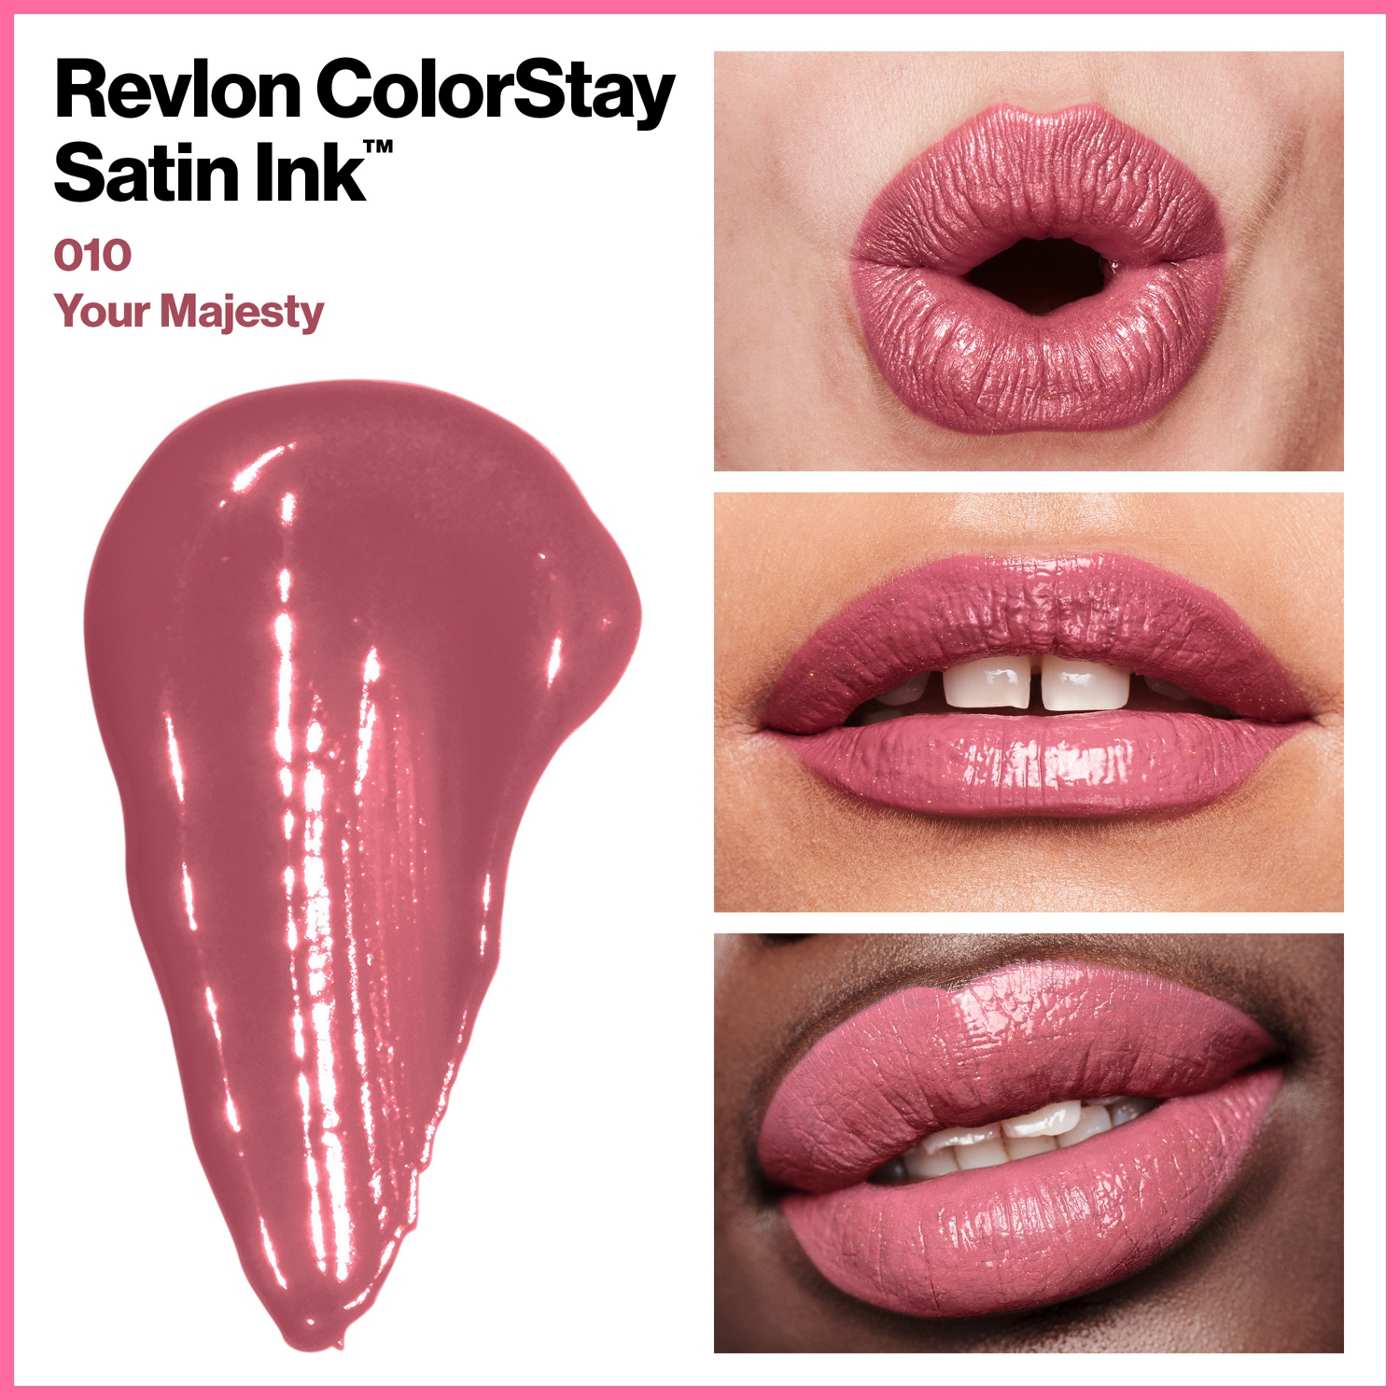 Revlon ColorStay Satin Ink Liquid Lipstick, Your Majesty; image 5 of 7